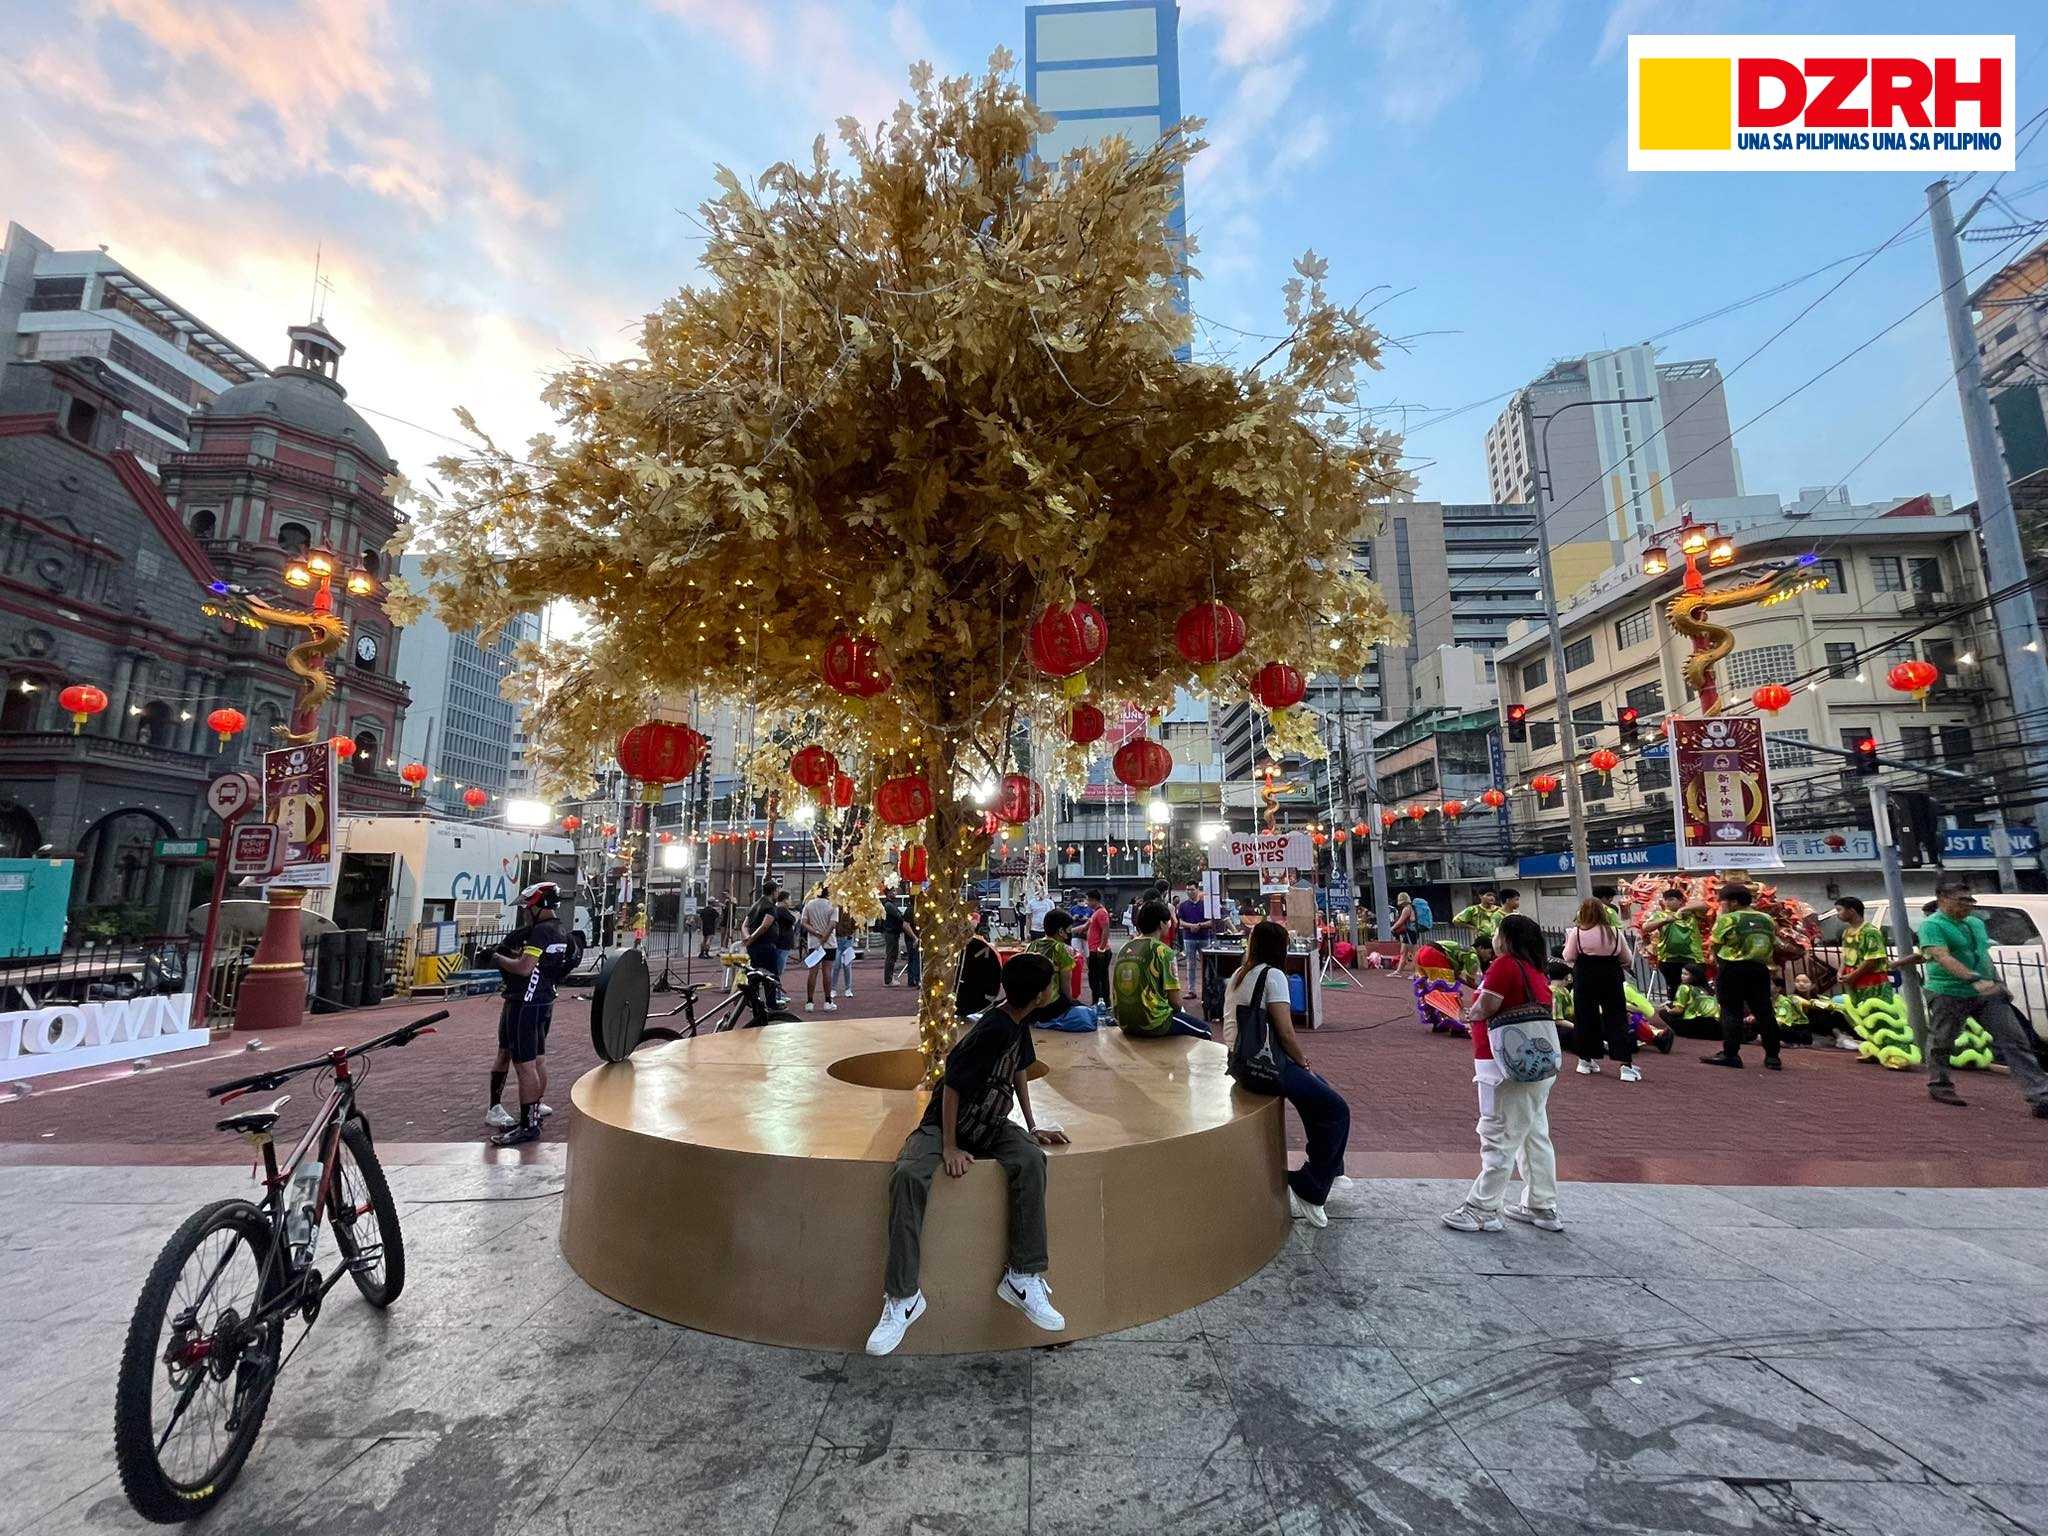 Manila expects 1M visitors at Binondo's Chinese New Year